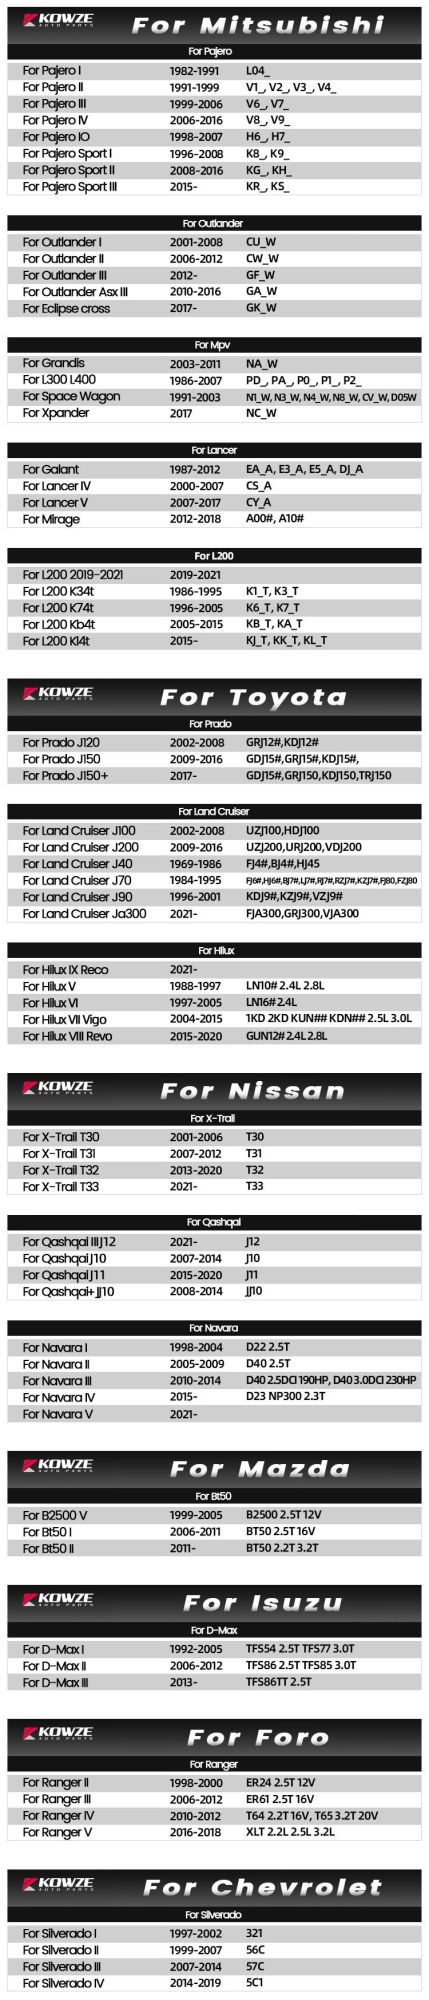 Kowze Car Parts Suspensions Spare Part Stabilizer Bush for Mitsubishi L200 Pajero MPV Nissan Toyota Ford Isuzu Mazda Chevrolet